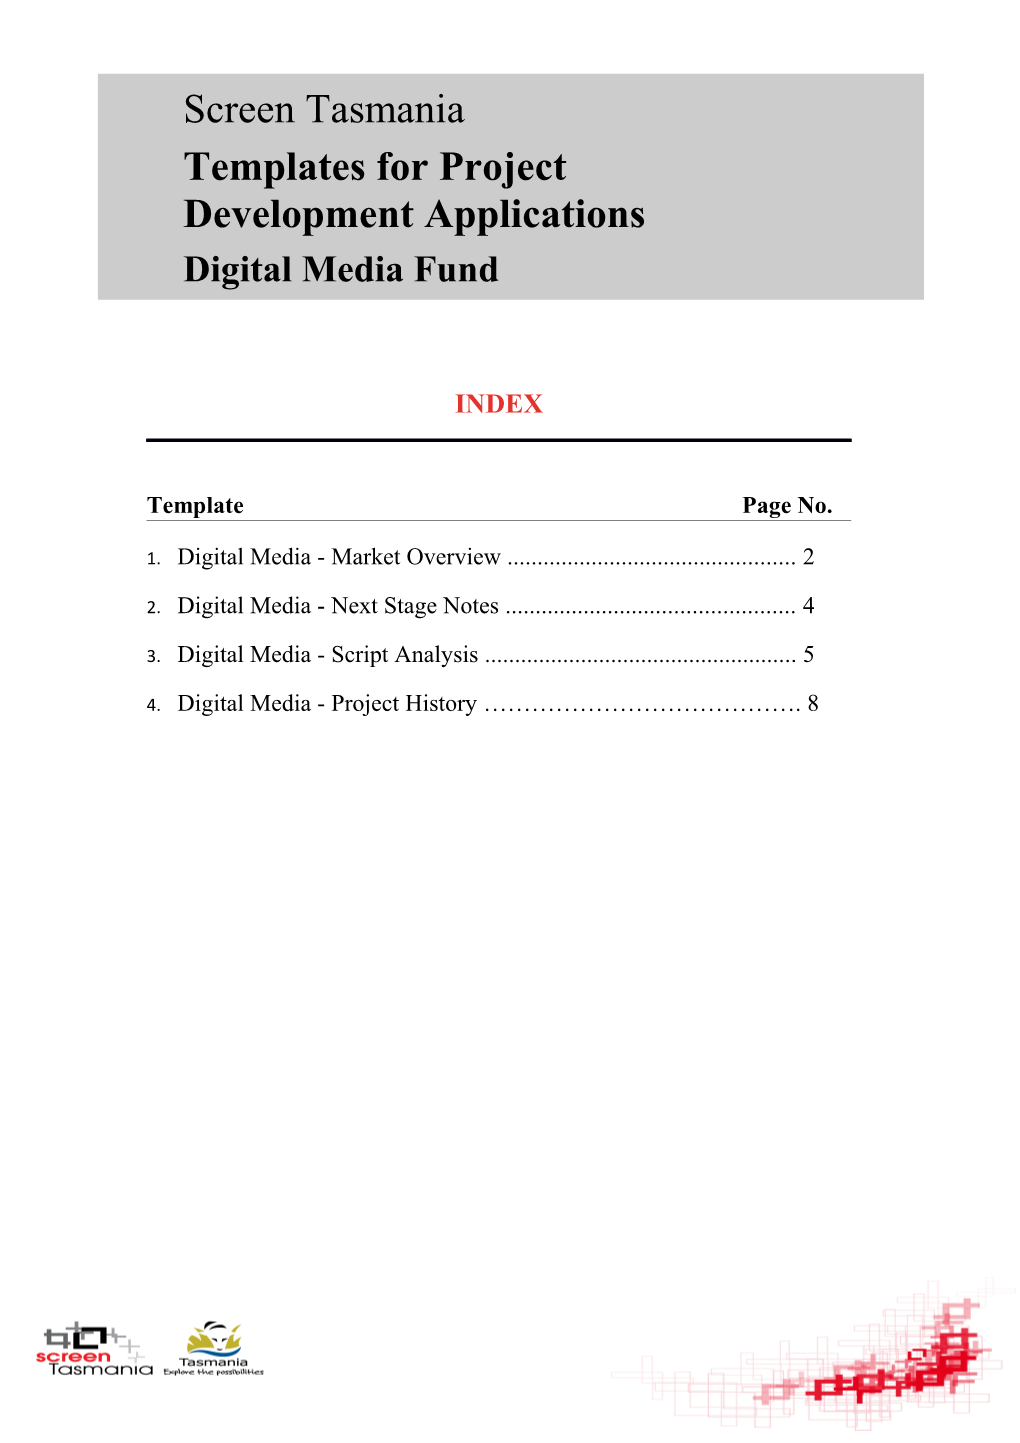 Digital Media - Next Stage Notes 4